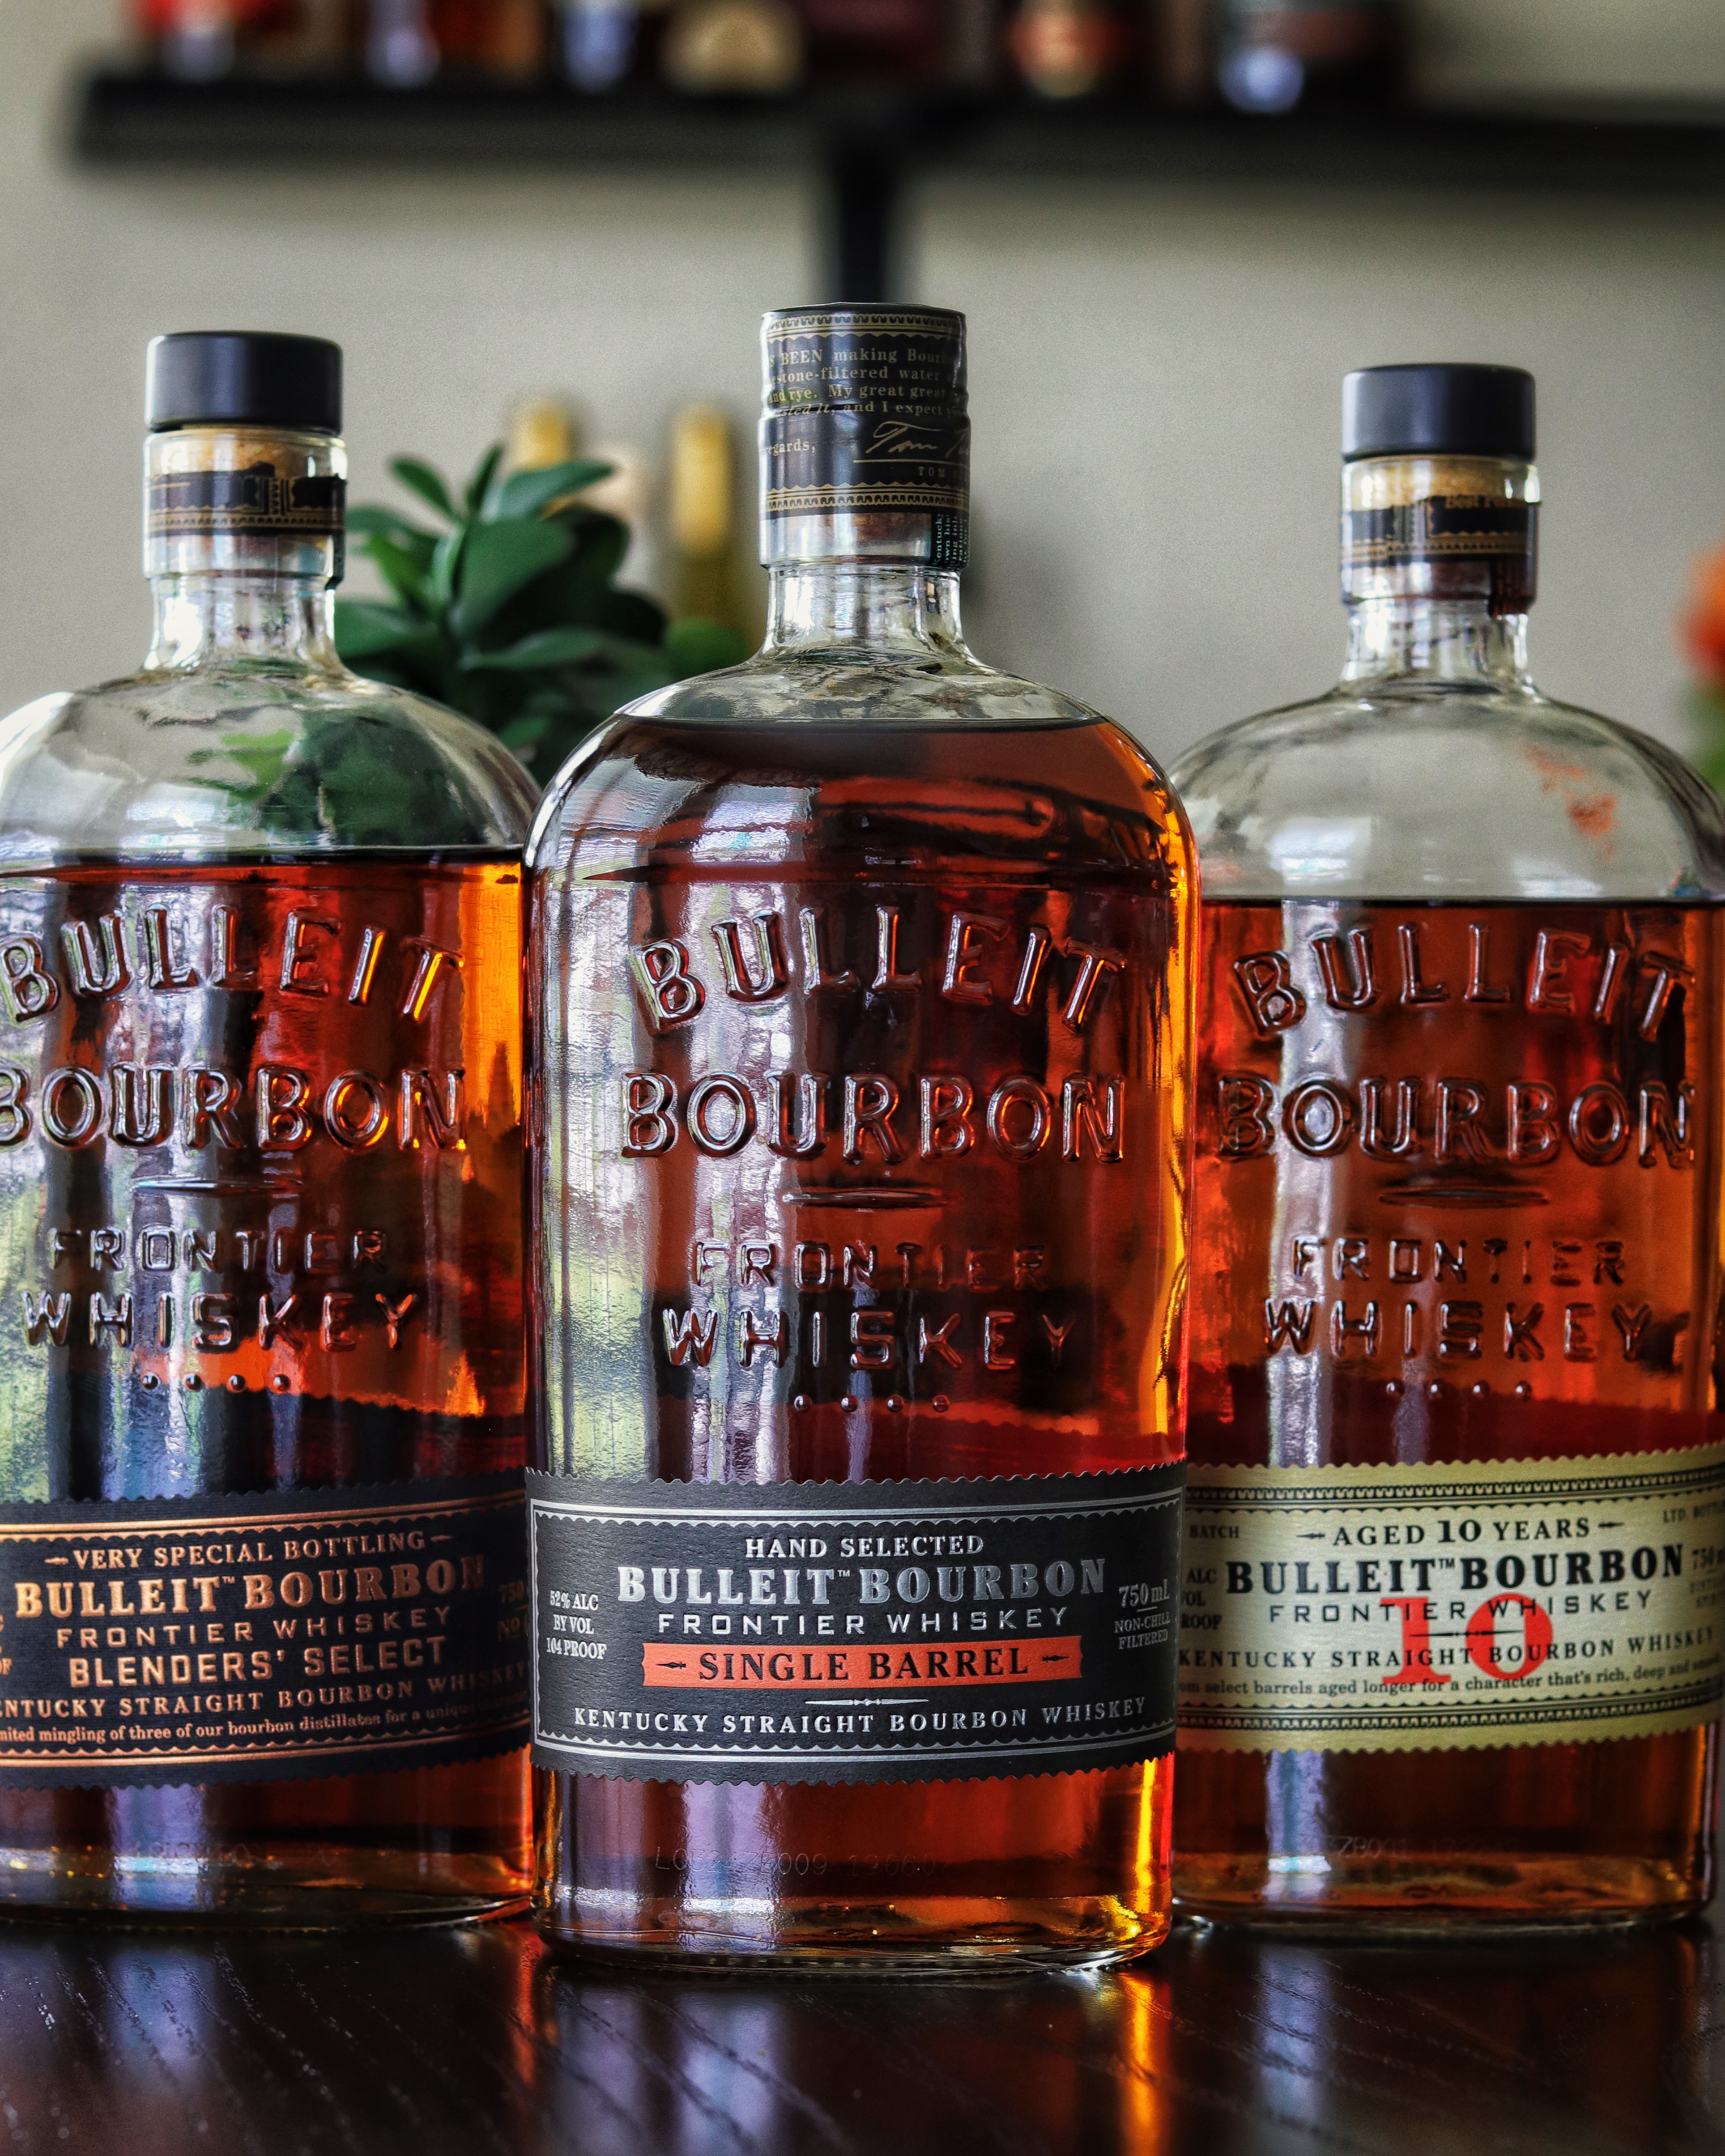 Bulliet Bourbon, Single Barrel, 10 Year Old Bourbon